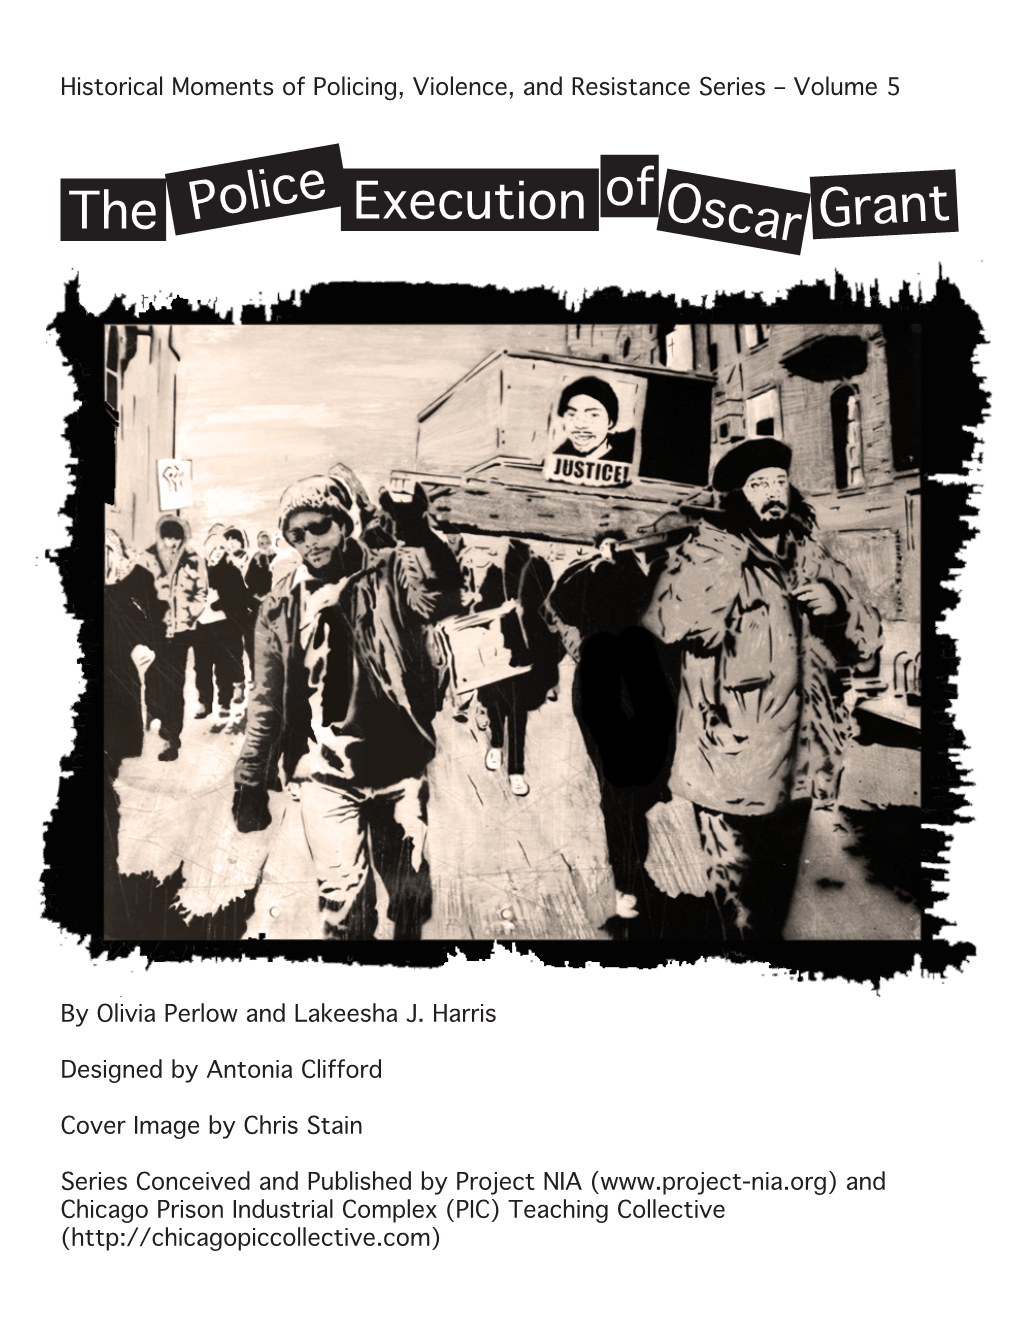 The Police Execution of Oscar Grant (PDF)